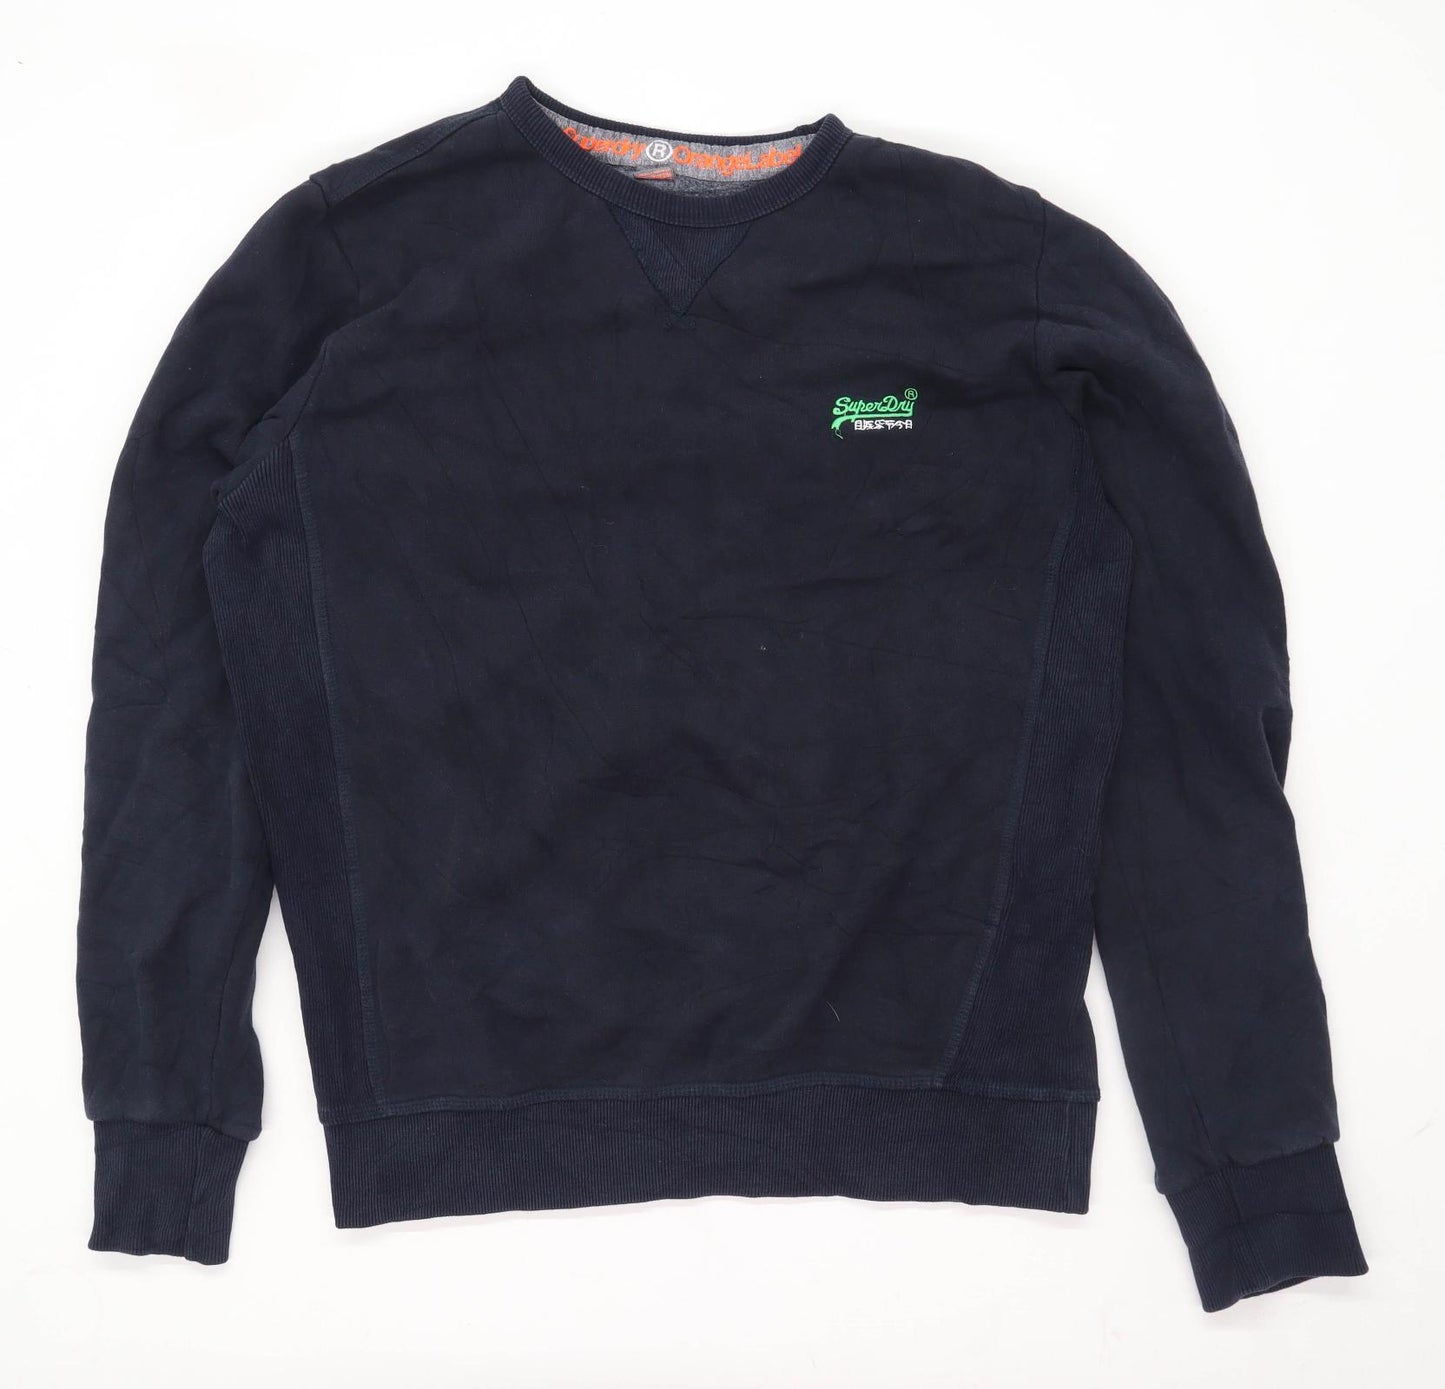 Superdry Mens Size XL Cotton Blend Black Sweatshirt